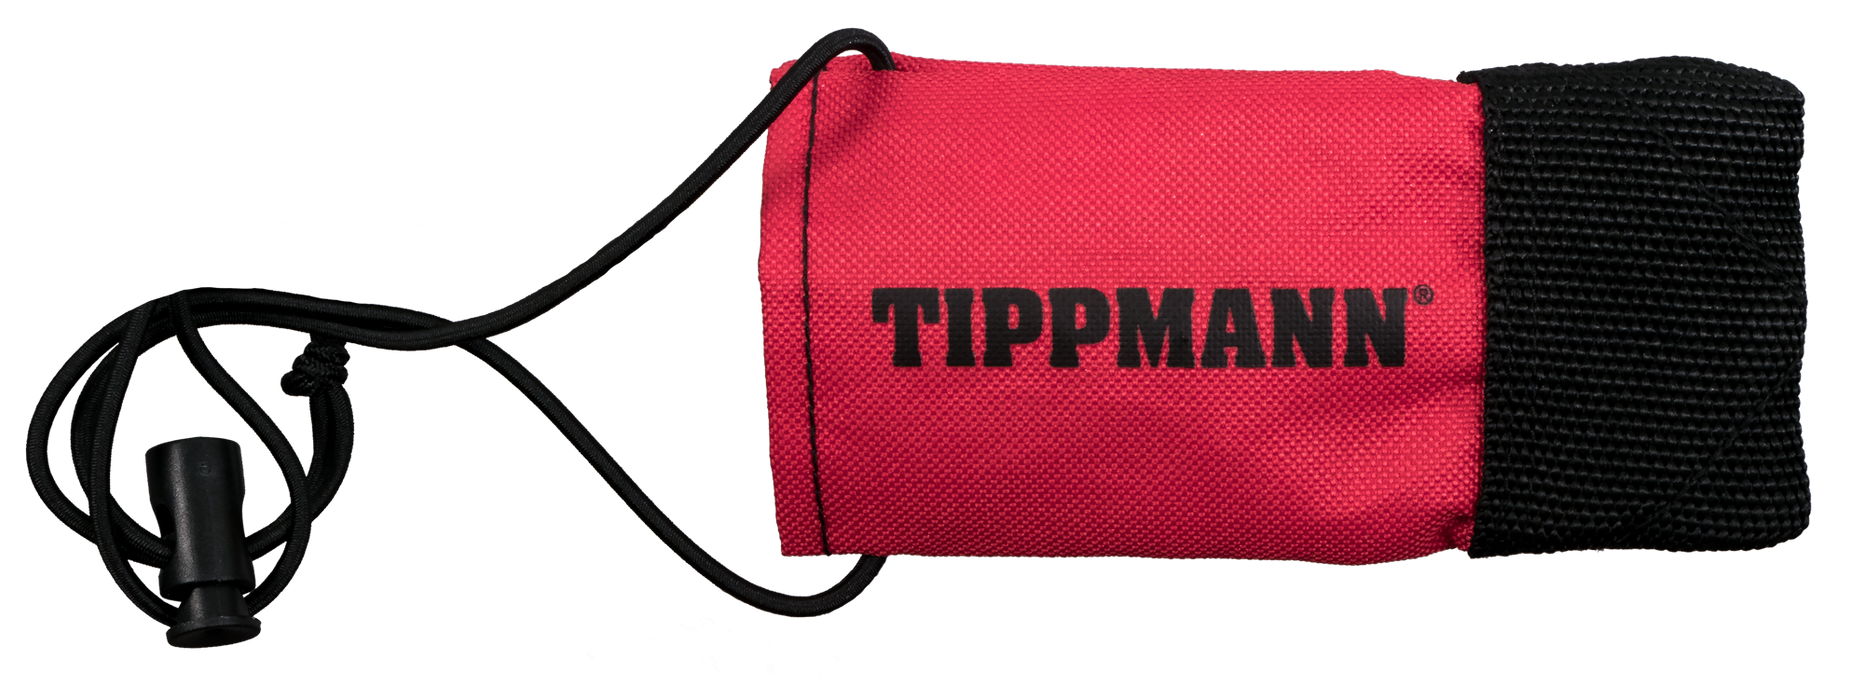 TIPPMANN BARREL BLOCKER - RED/BLACK